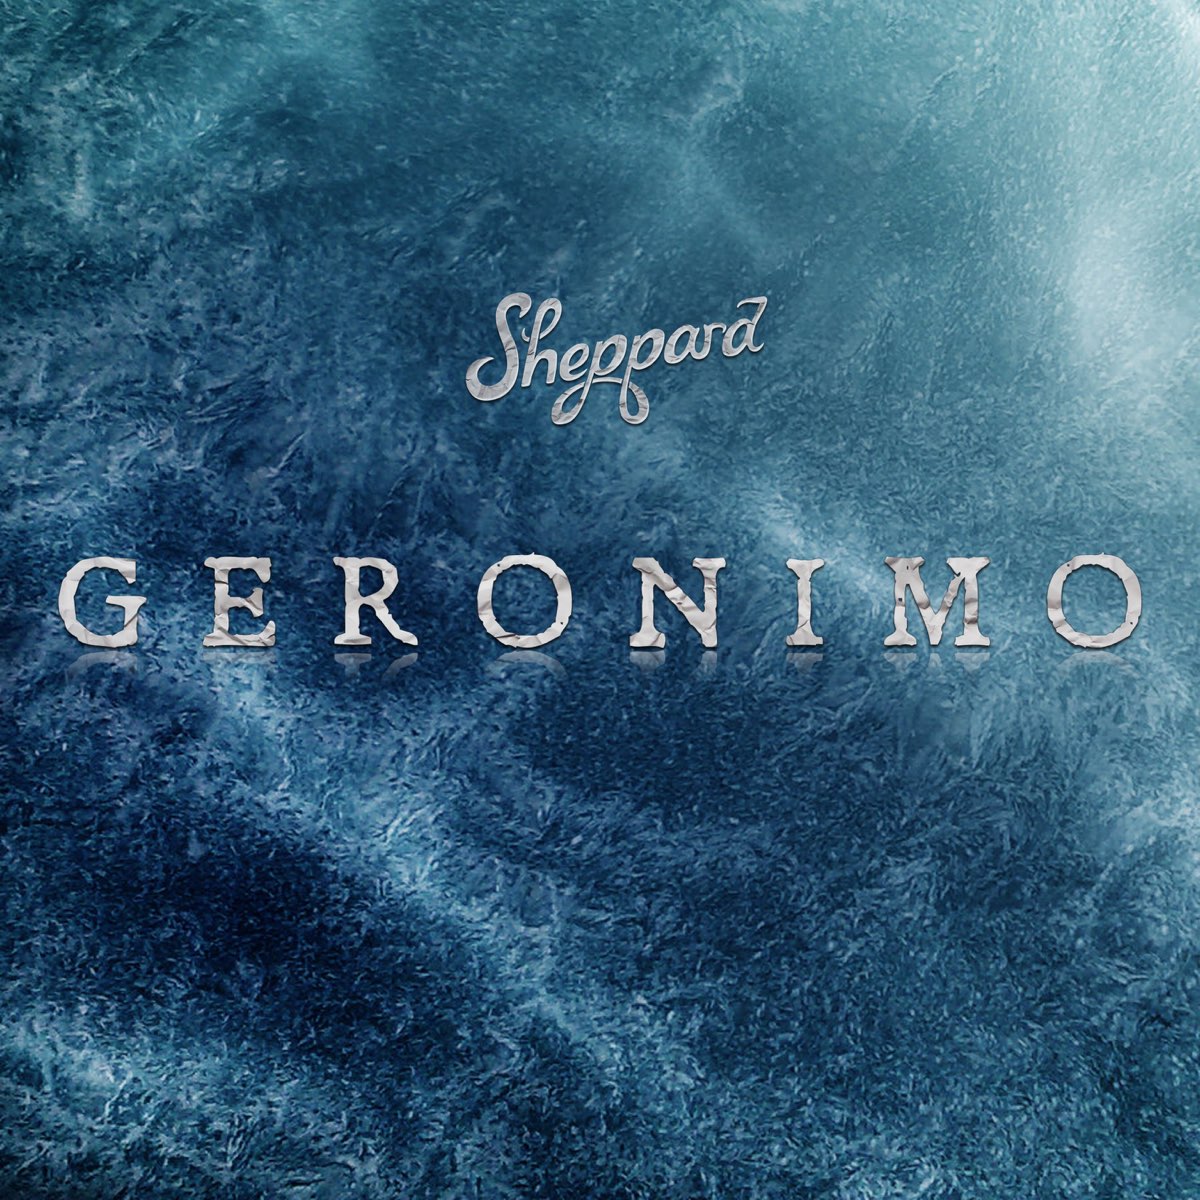 Geronimo - Single by Sheppard on Apple Music